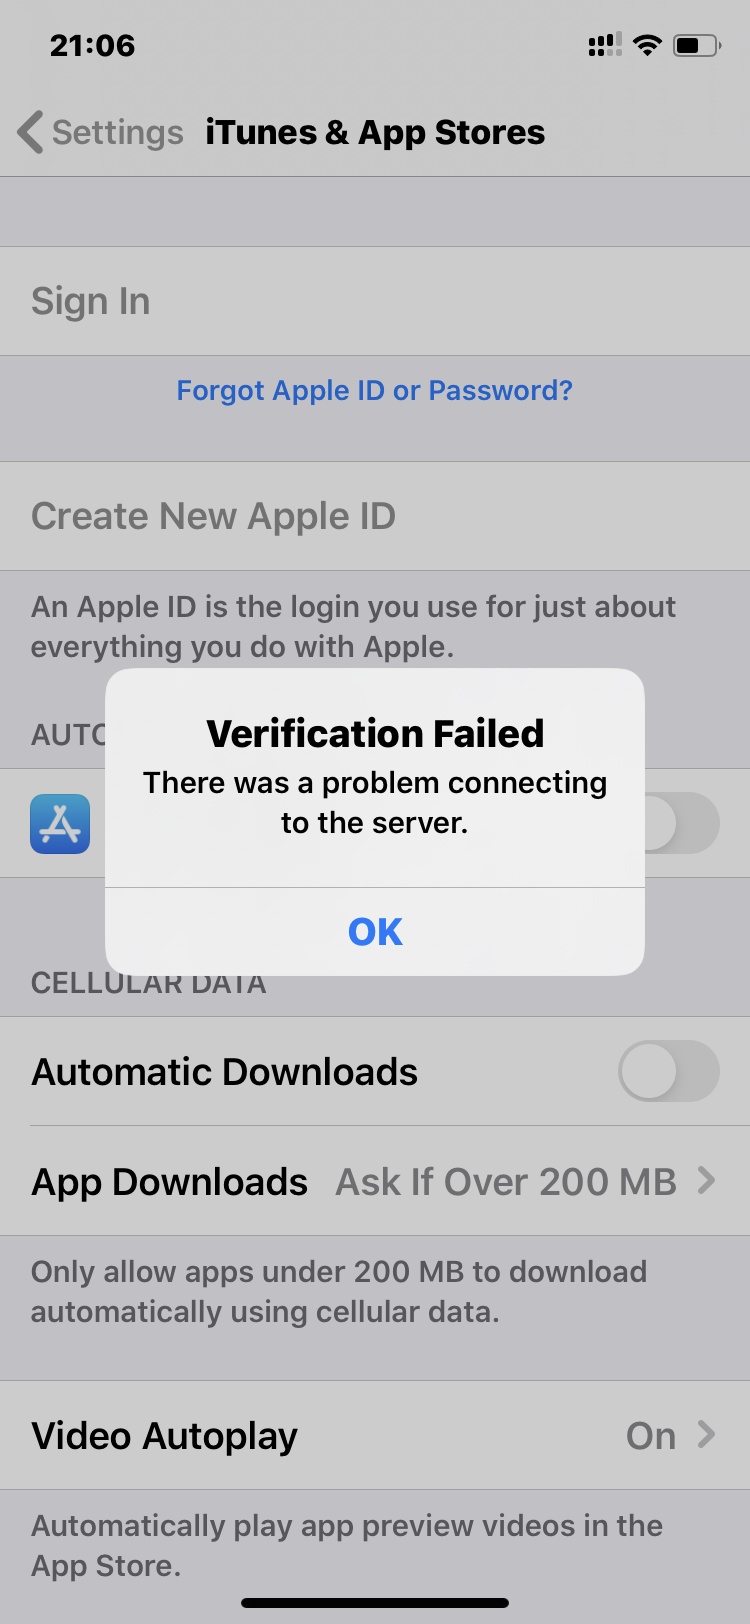 Application Login error - Apple Community